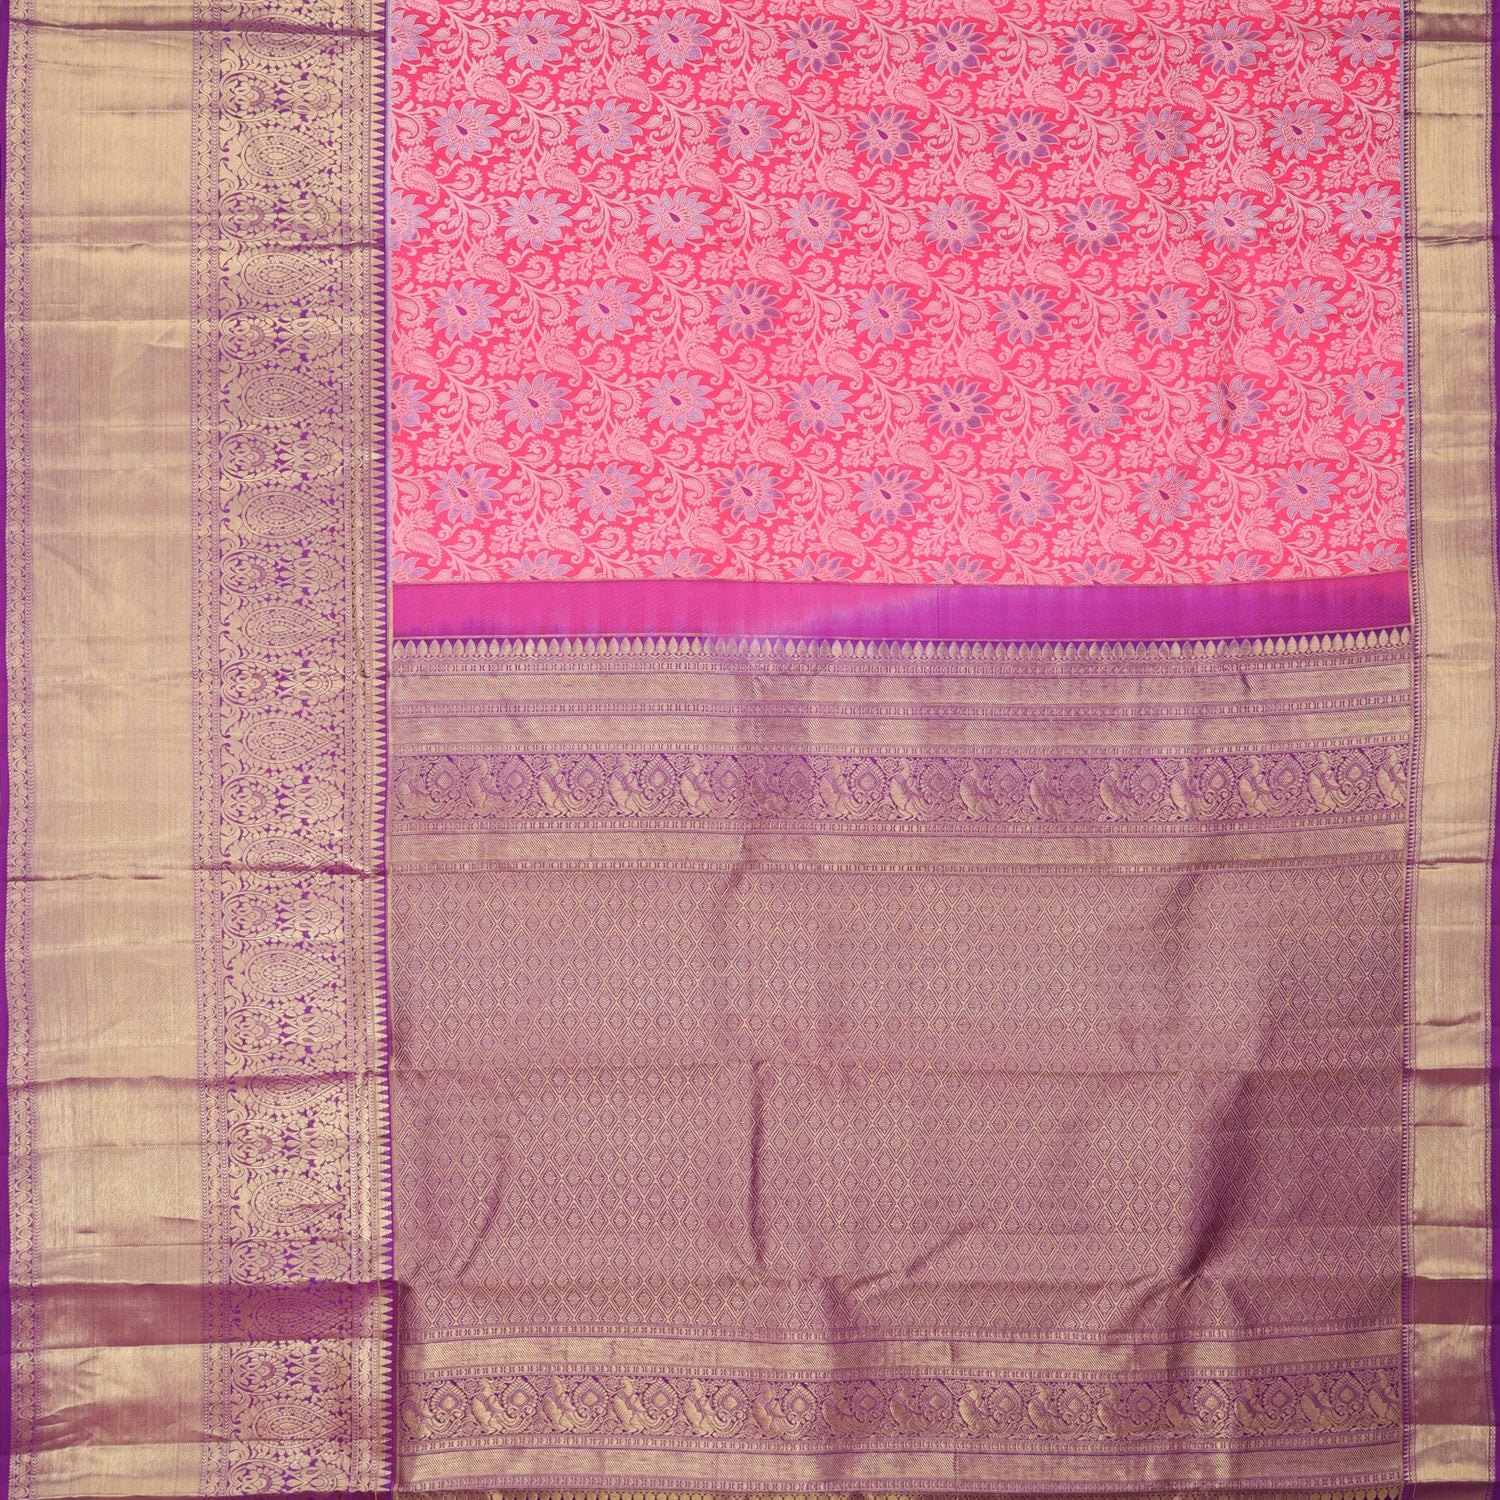 Bright Pink Kanjivaram Silk Saree With Floral Motifs Pattern - Singhania's